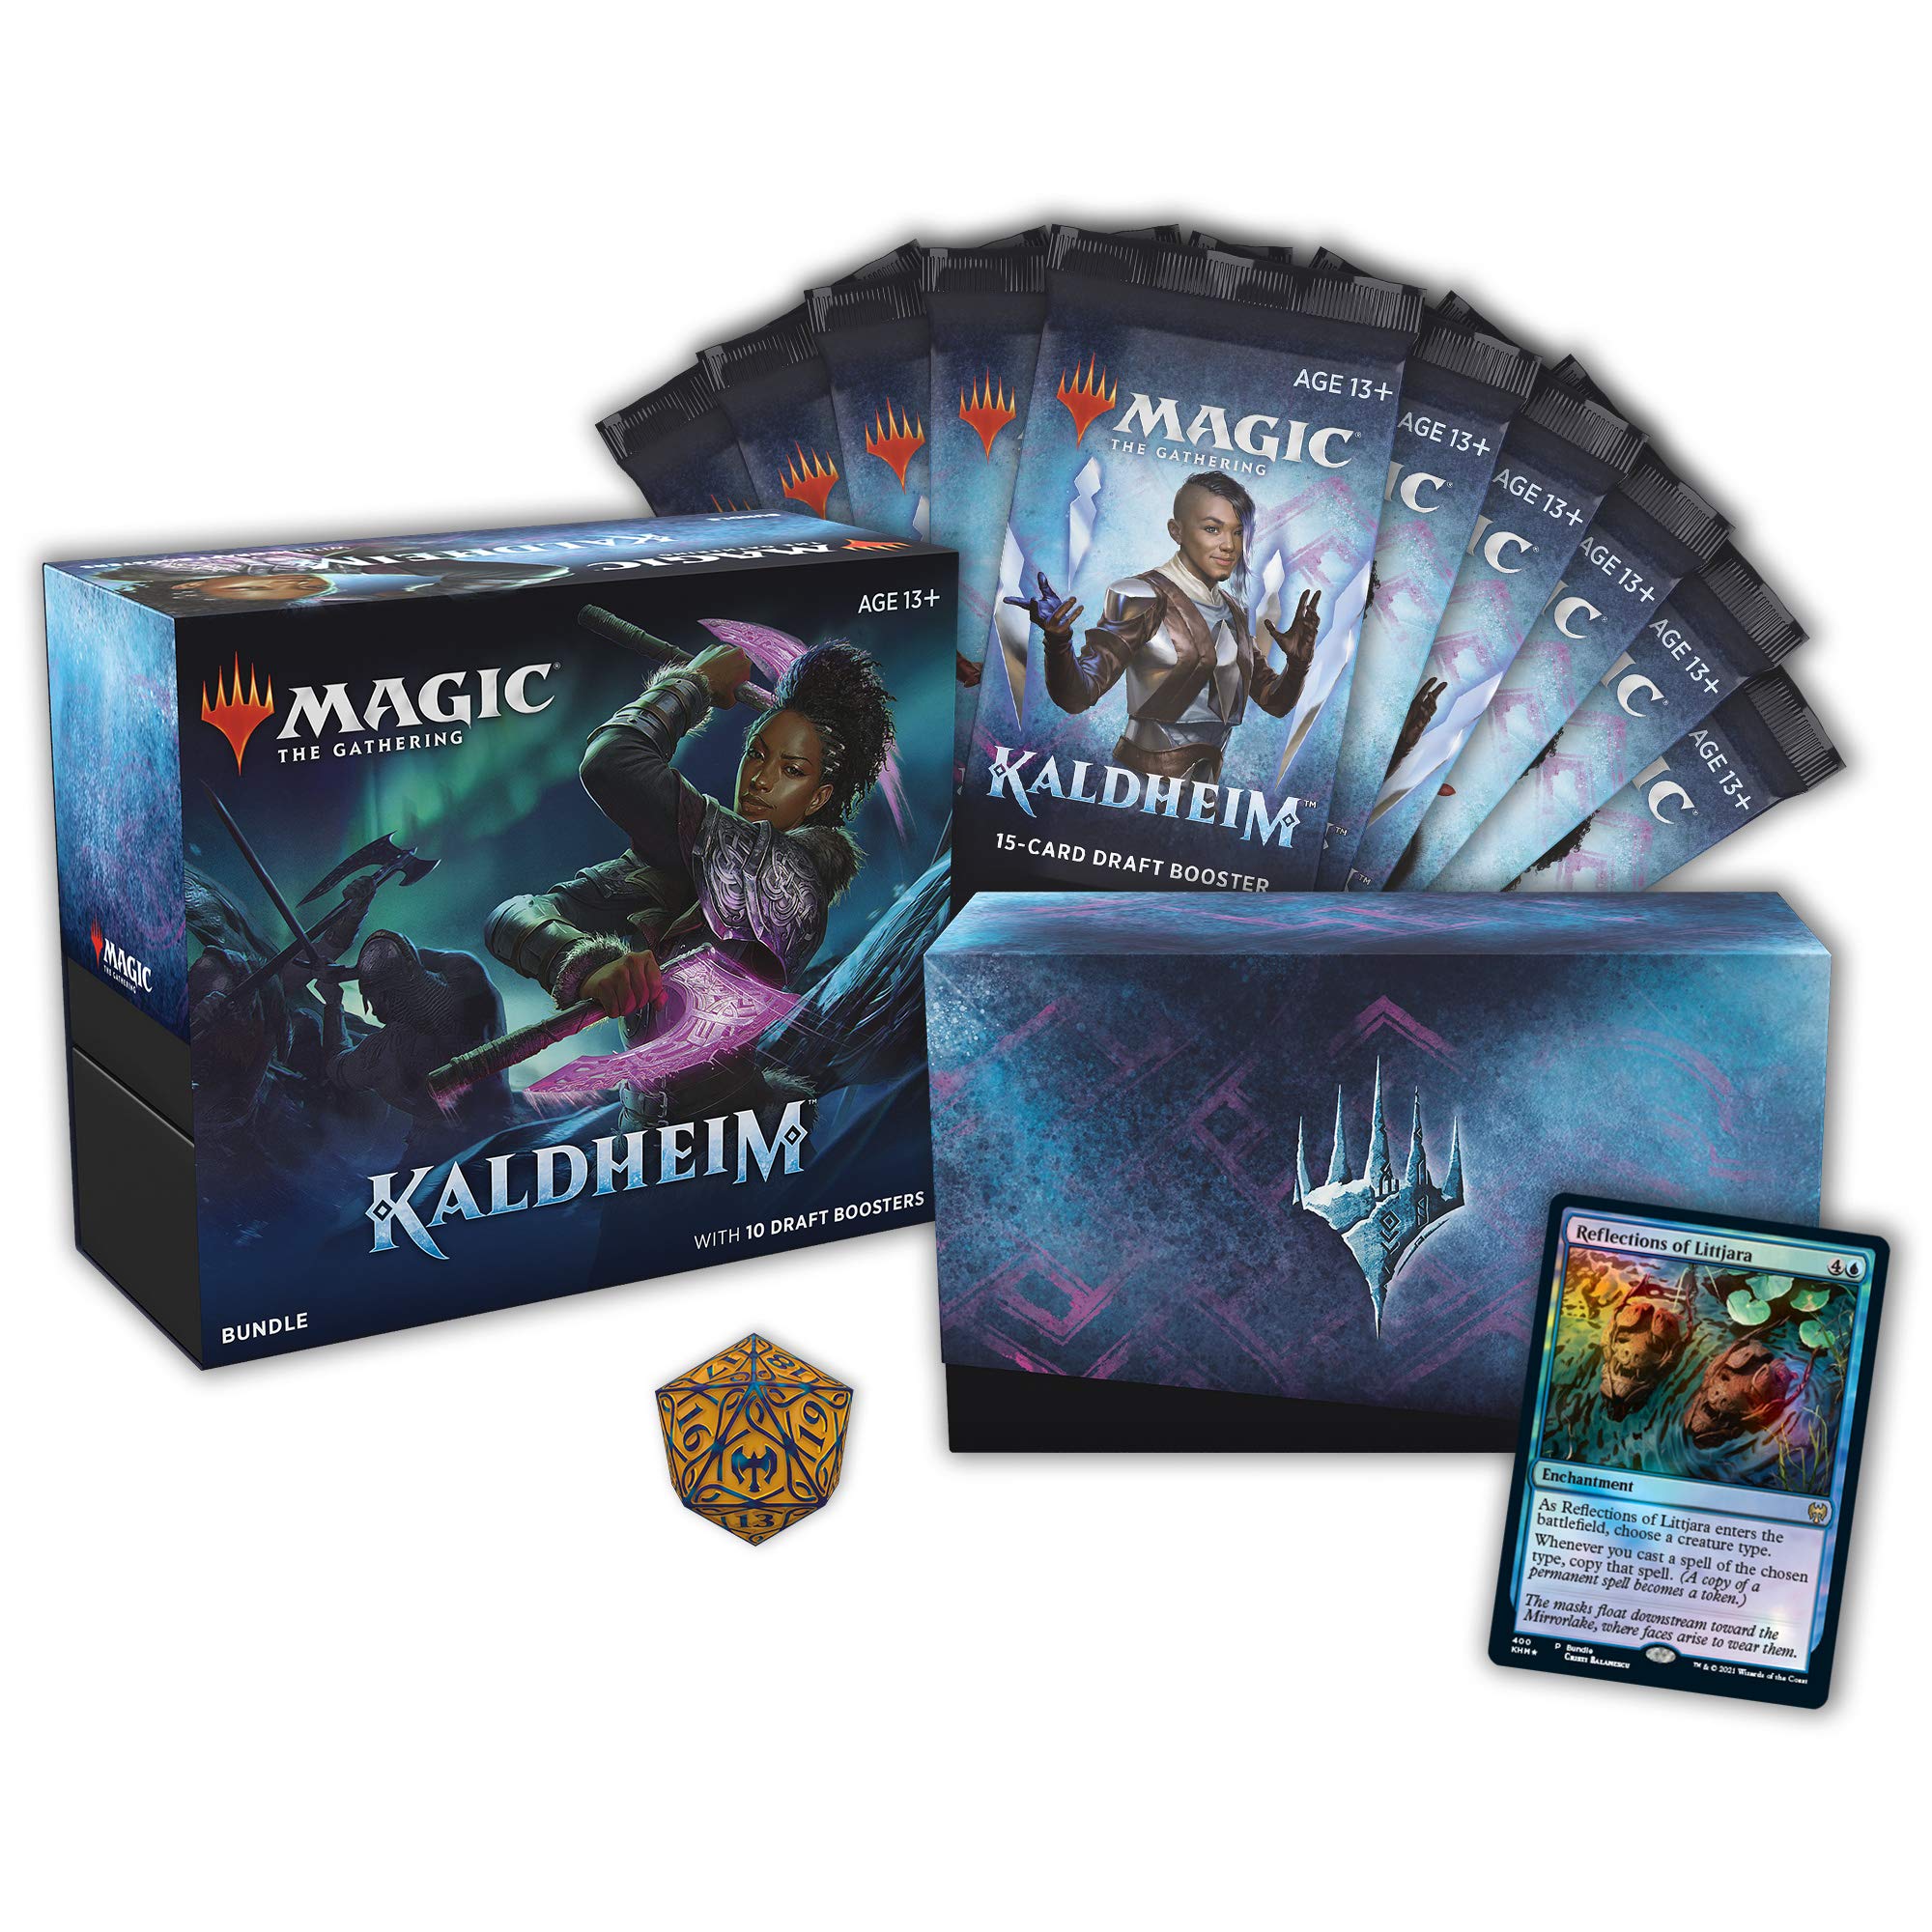 Magic The Gathering Kaldheim Bundle | 10 Draft Boosters (150 Magic Cards) + Accessories